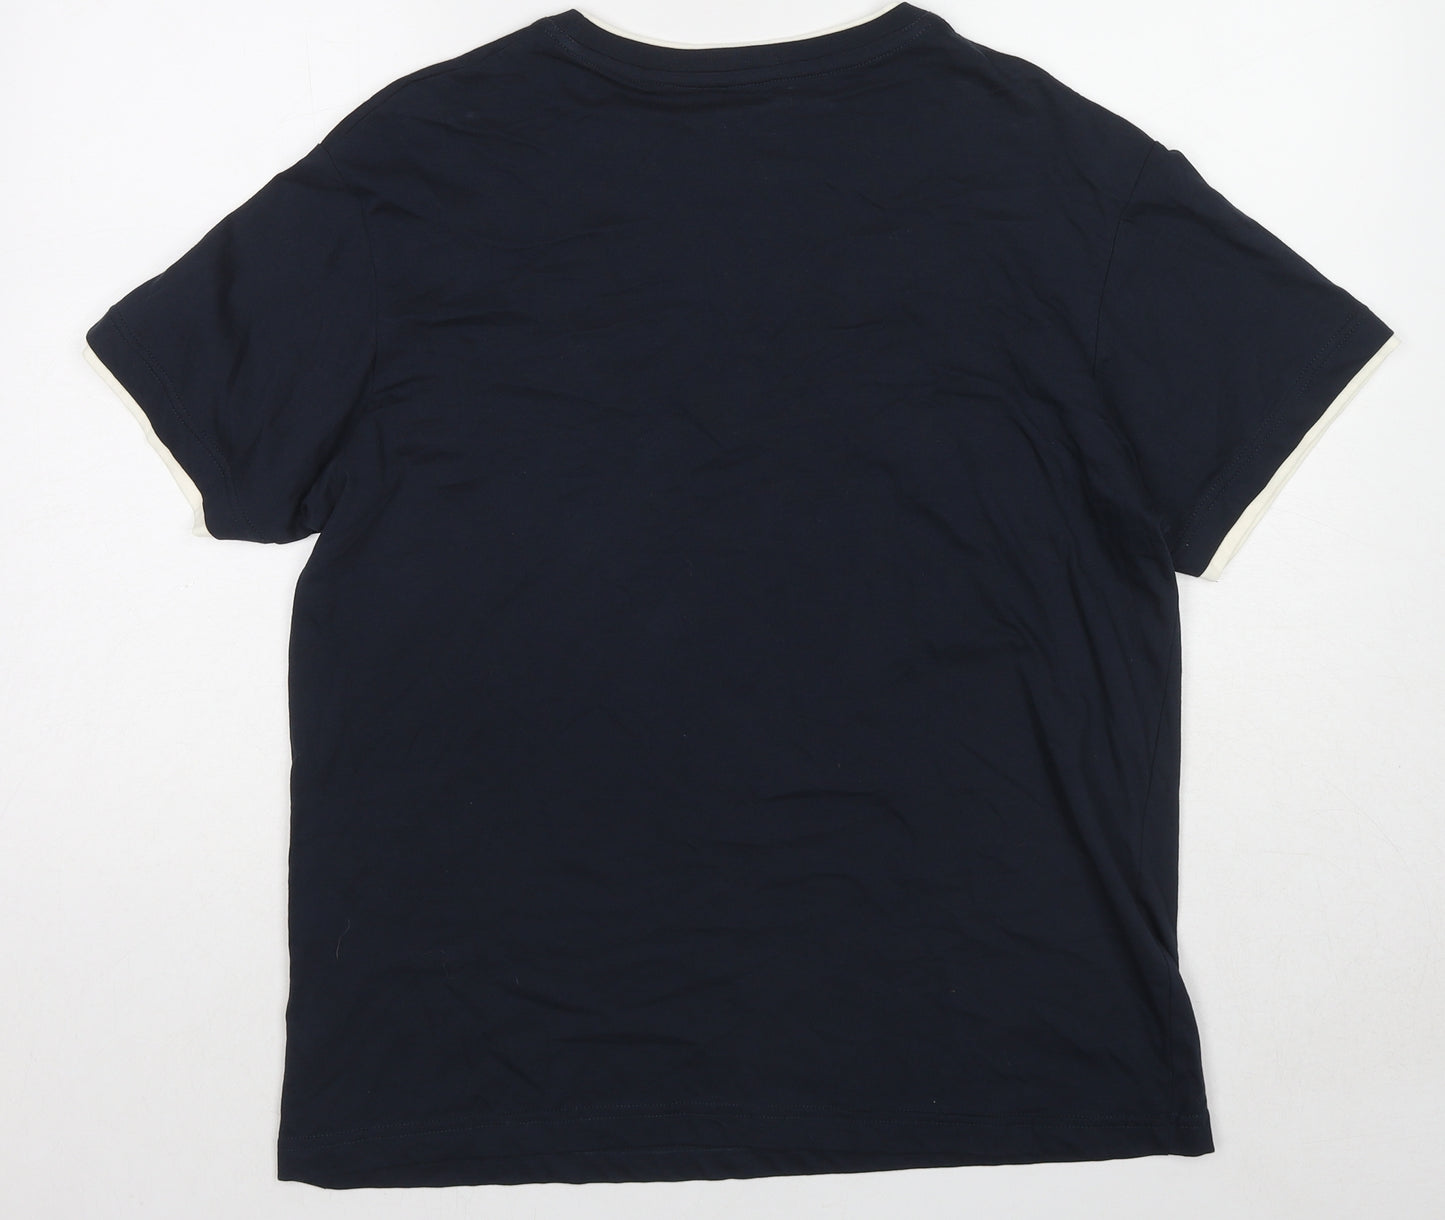 BHS Mens Blue Striped Cotton T-Shirt Size L Round Neck